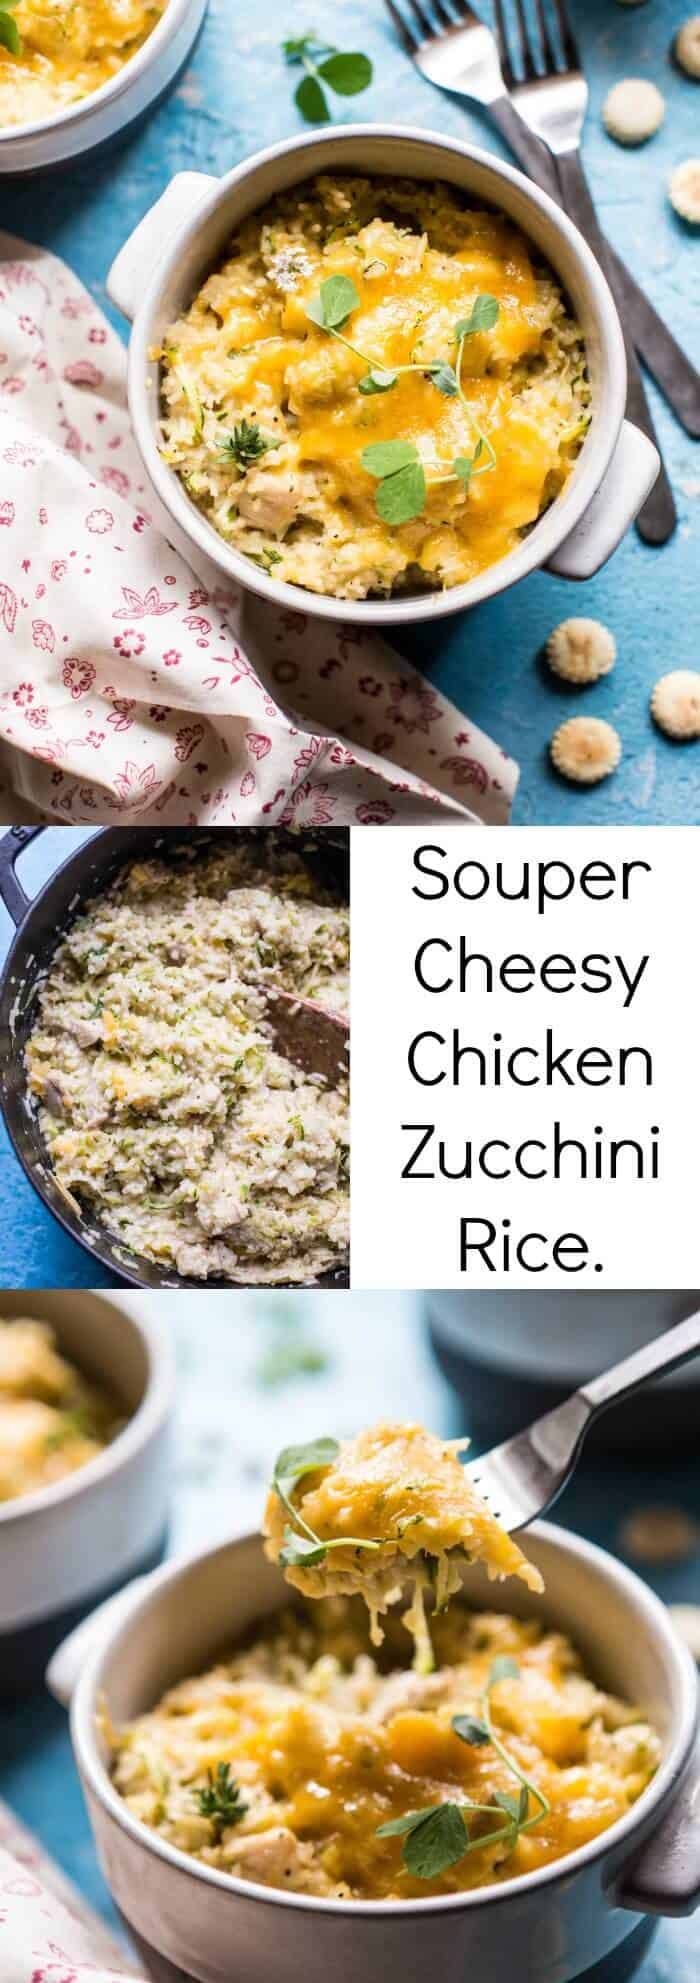 Souper Cheesy Chicken Zucchini Rice | halfbakedharvest.com @hbharvest